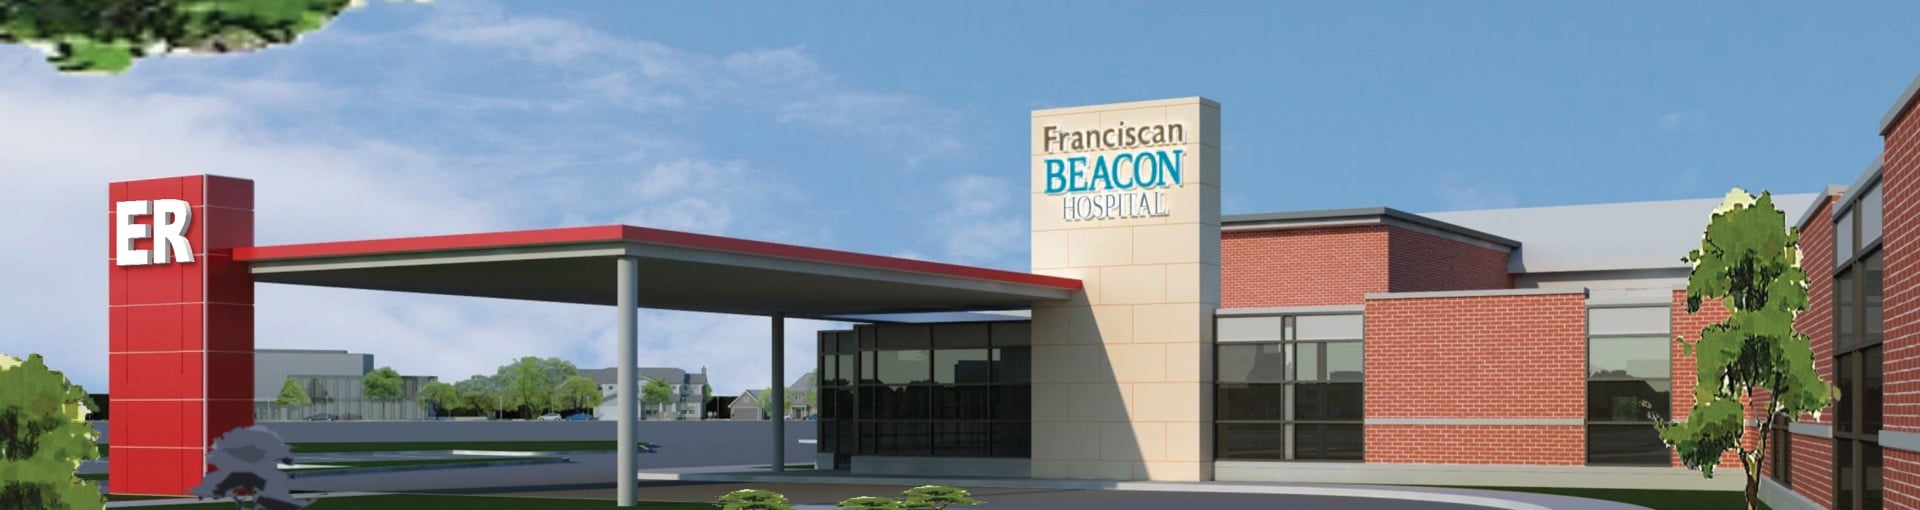 Franciscan Beacon Hospital